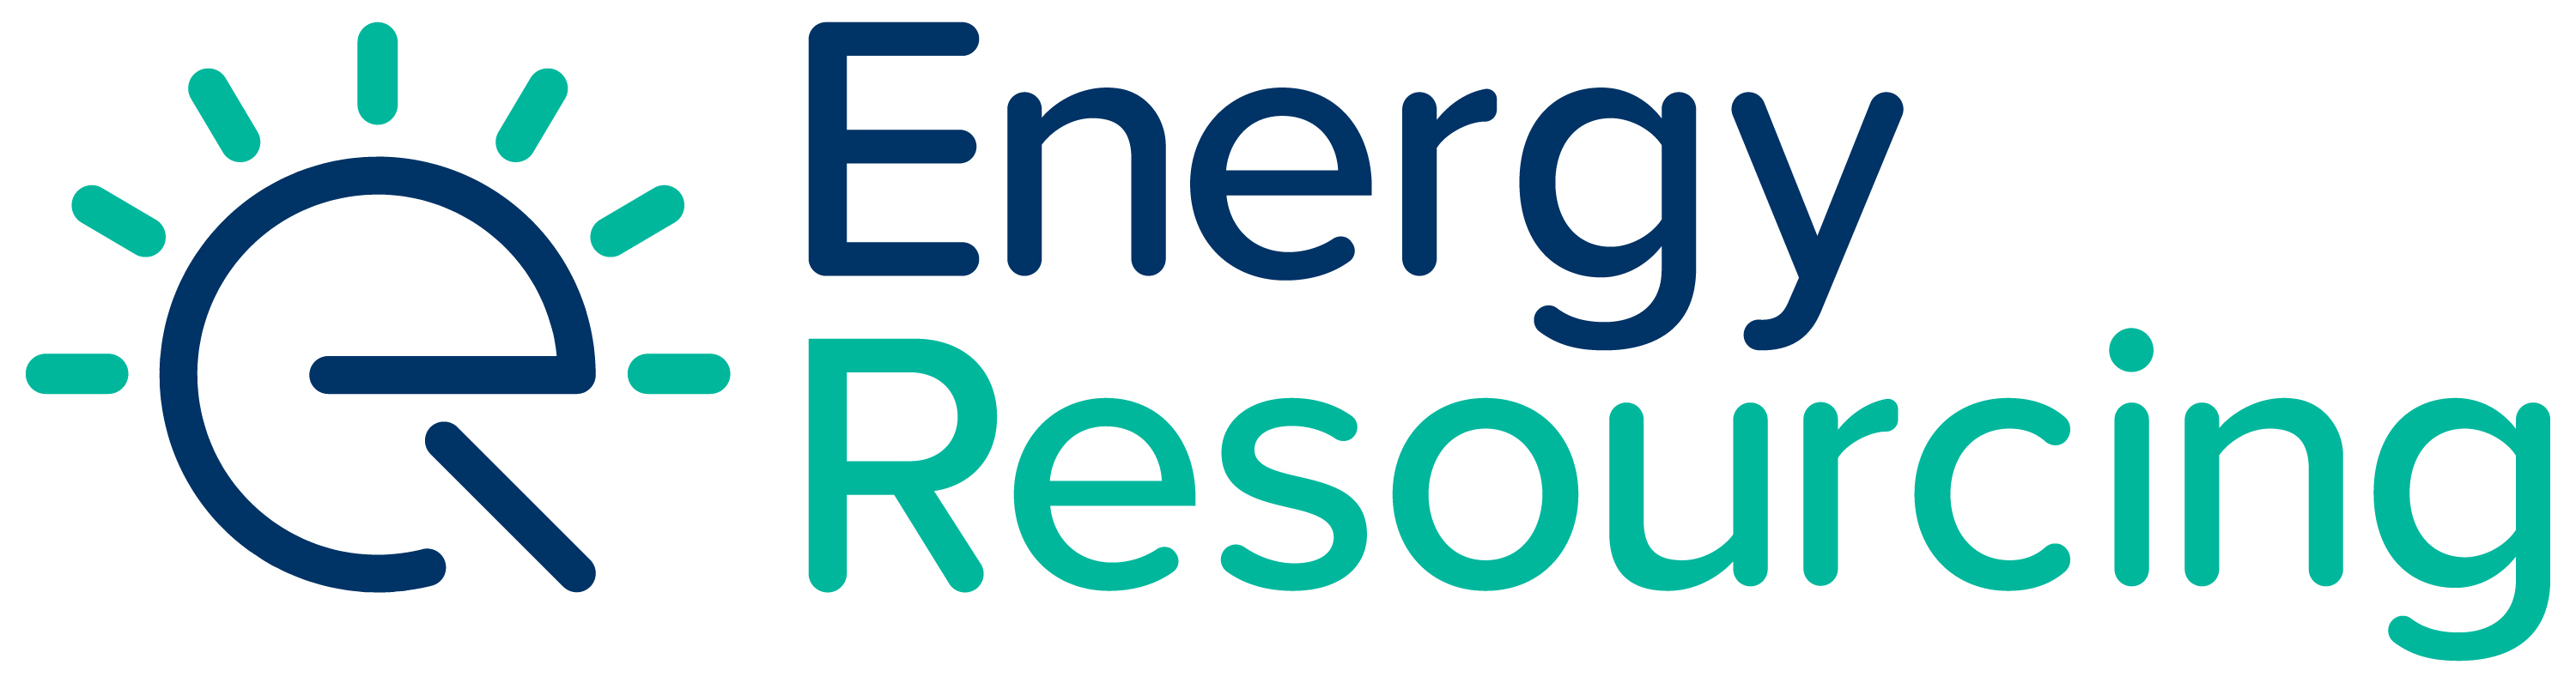 Energy Resourcin